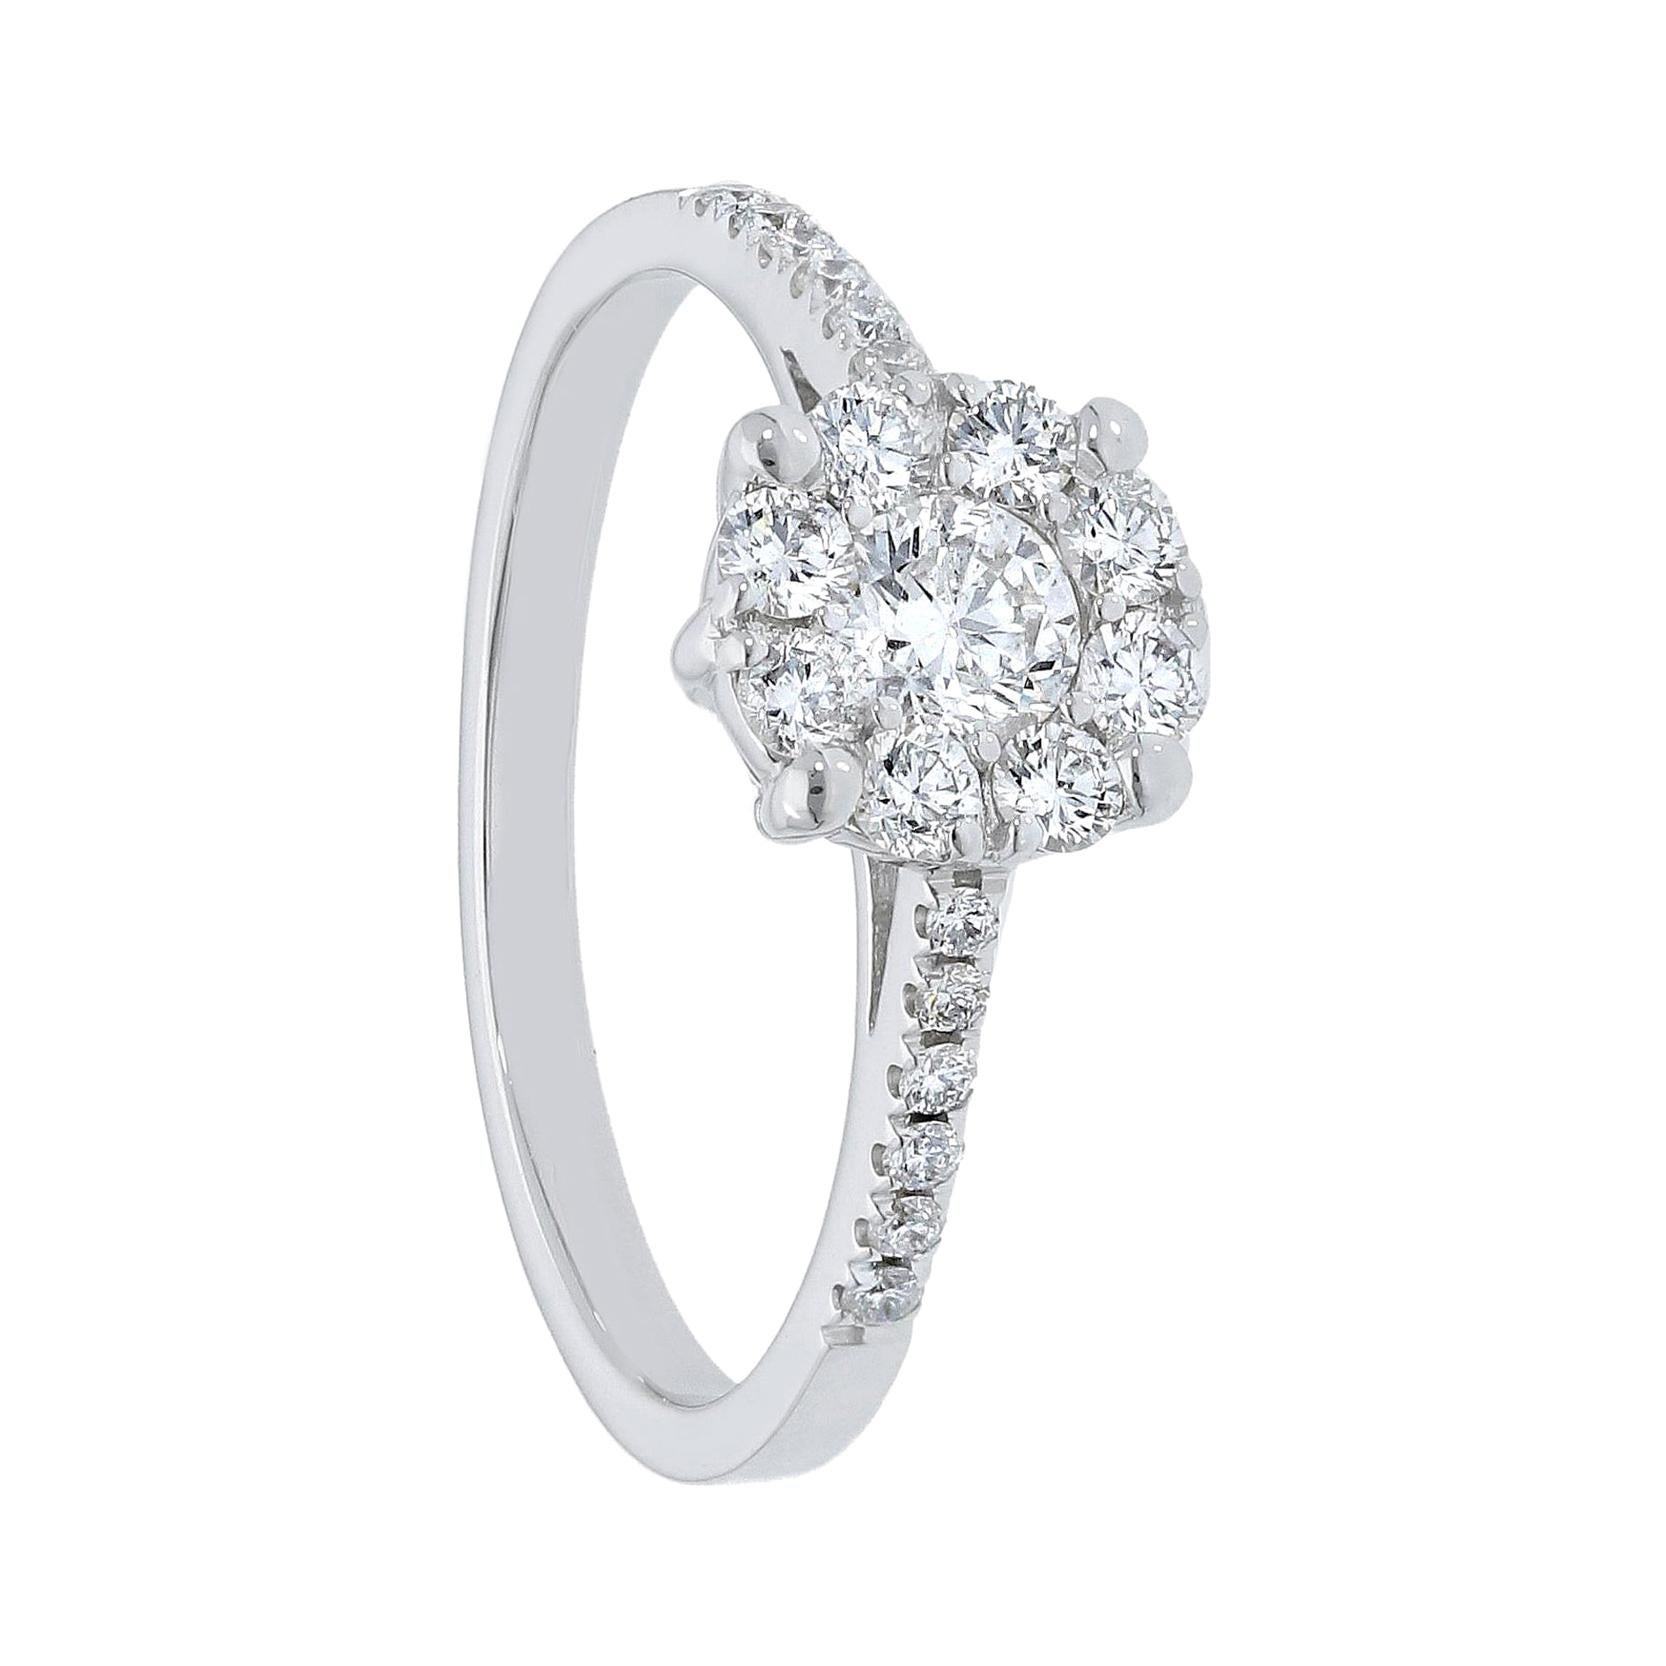 18k White Gold Wedding Ring with Diamonds